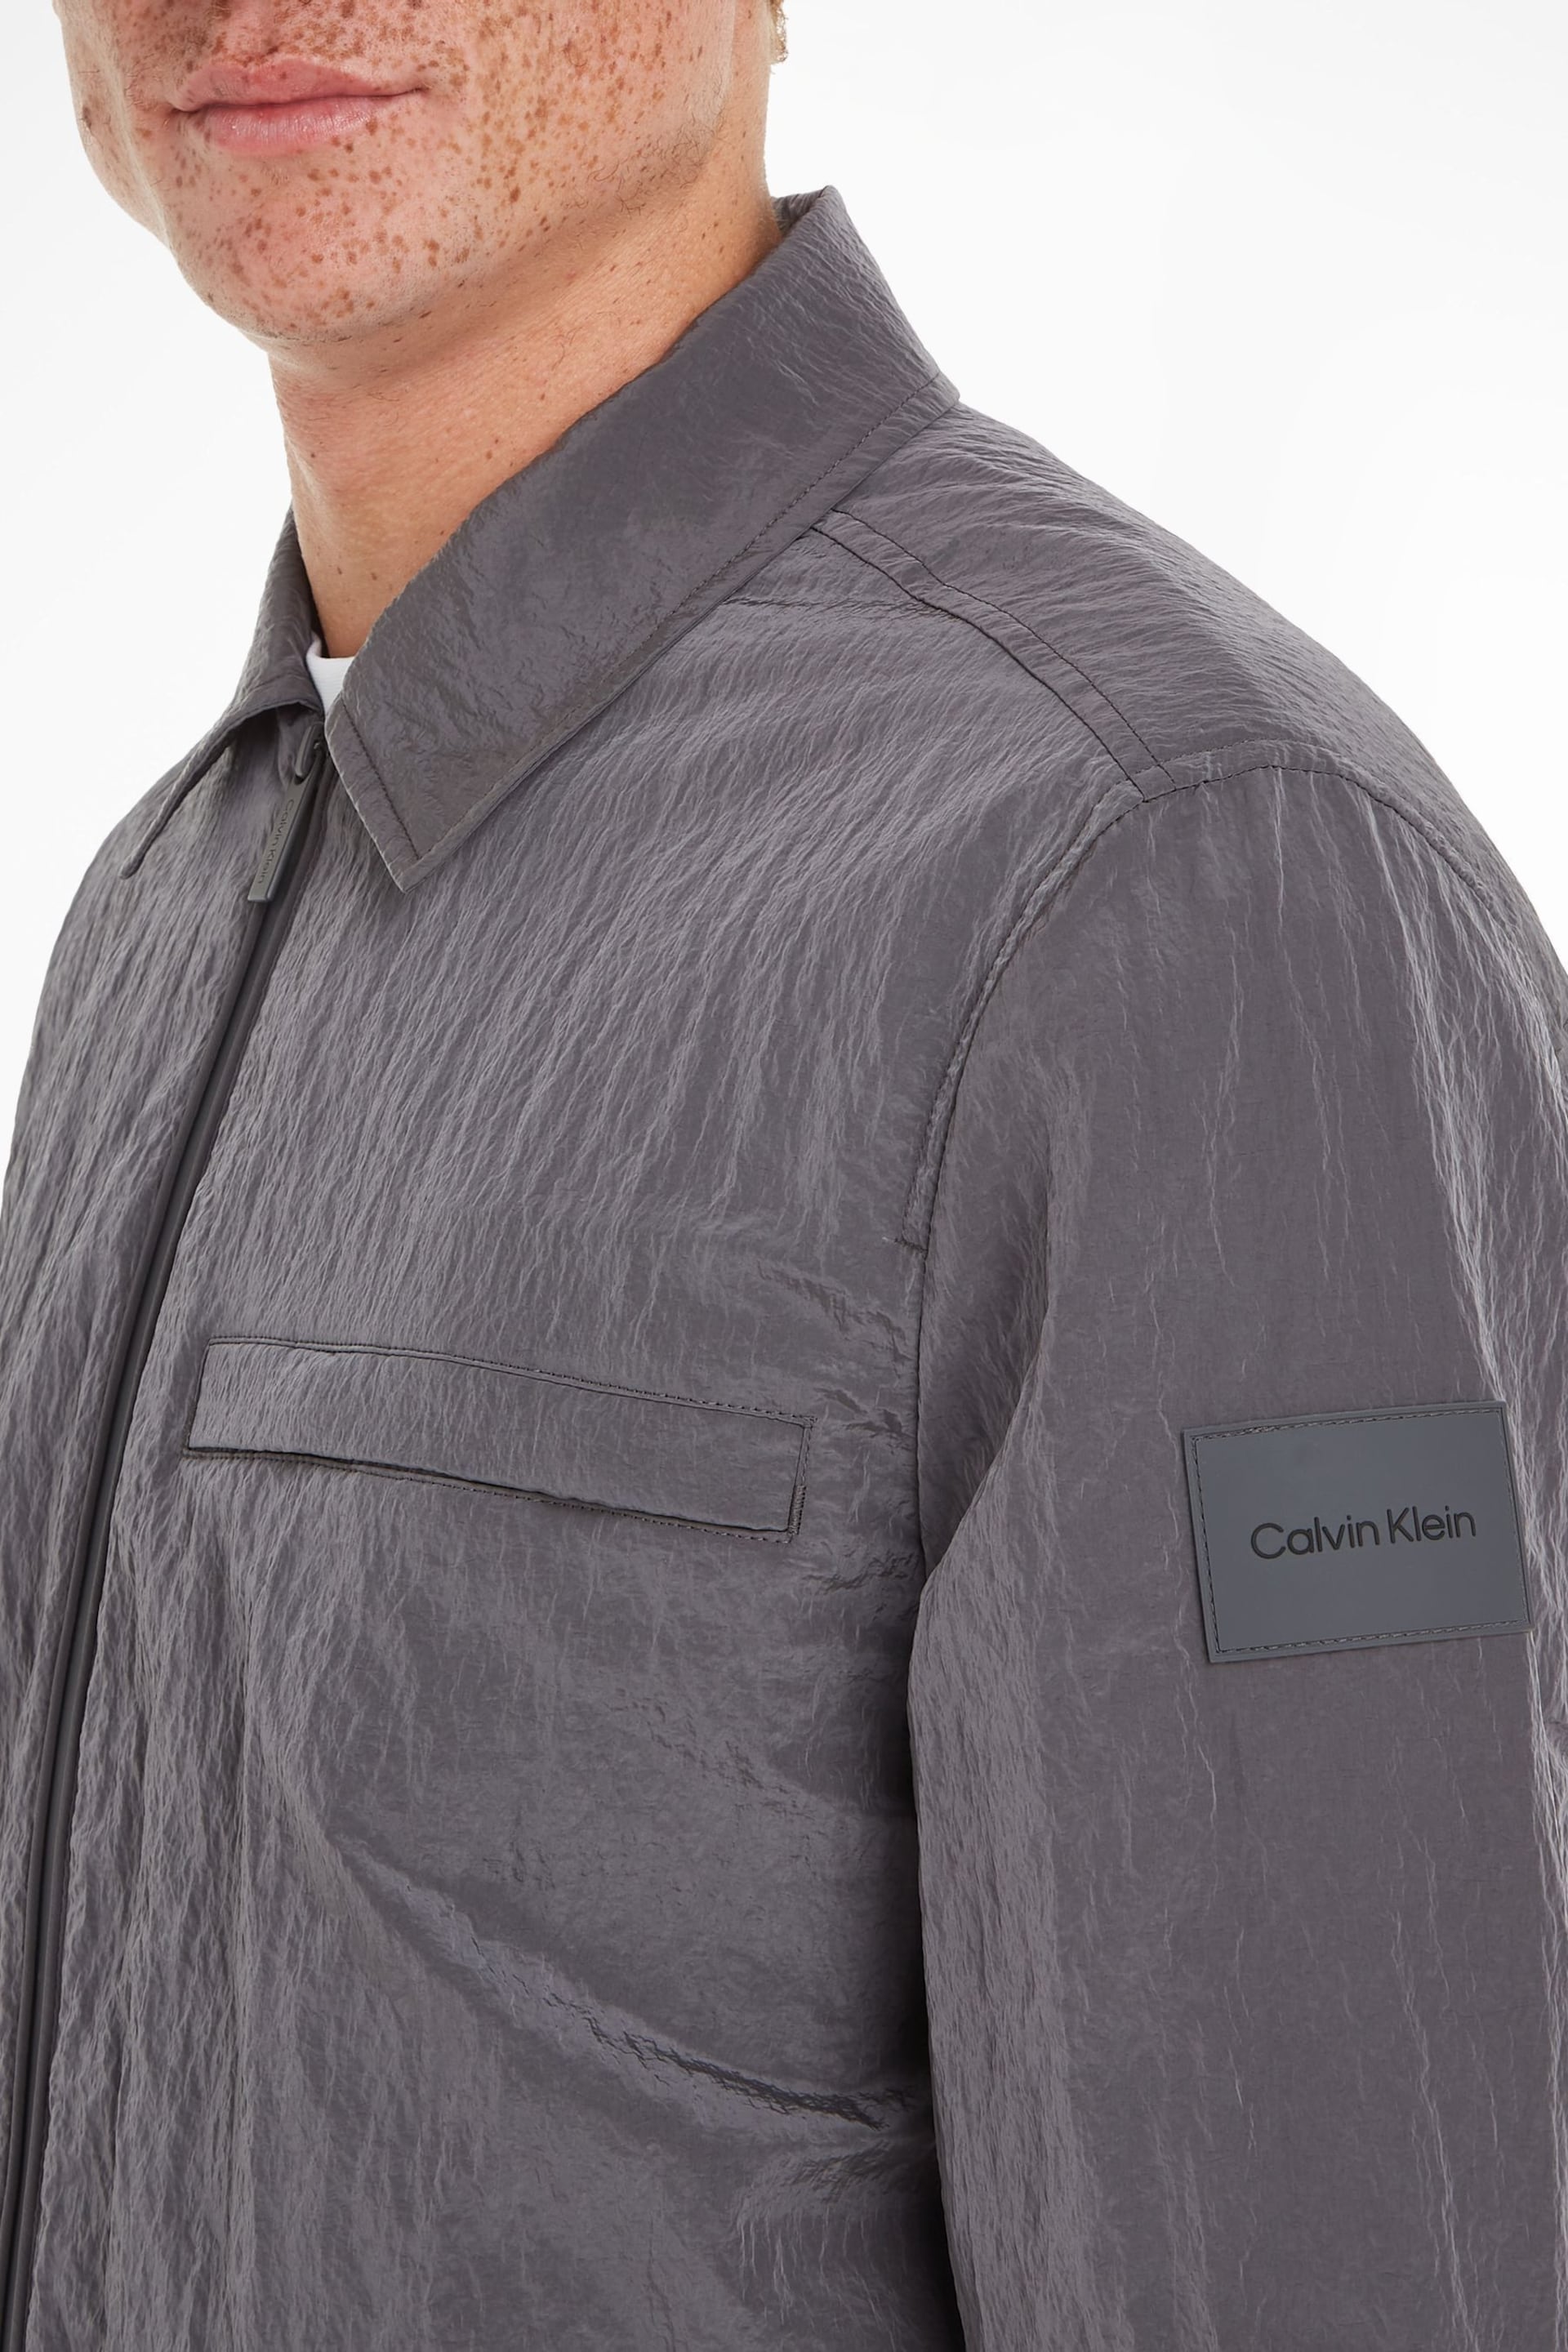 Calvin Klein Grey Crinkle 2.0 Shirt Jacket - Image 3 of 6